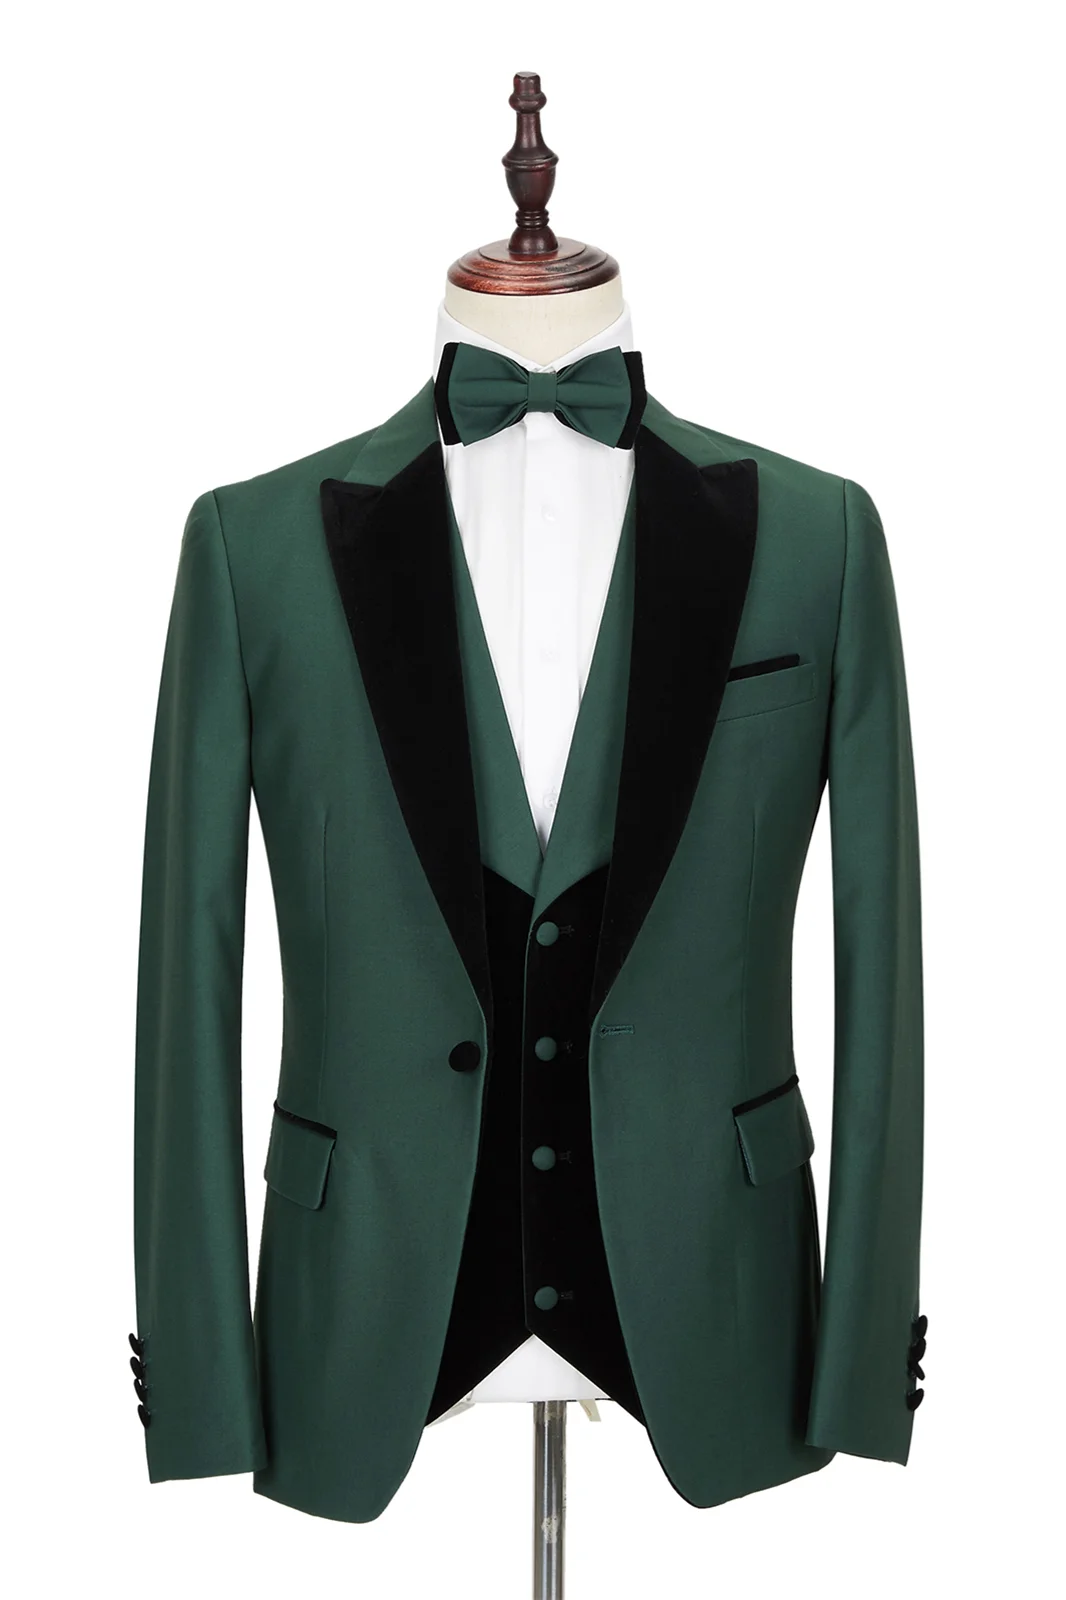 New Arrive Dark Green Wedding Blazer With Black Peak Lapel For Groom